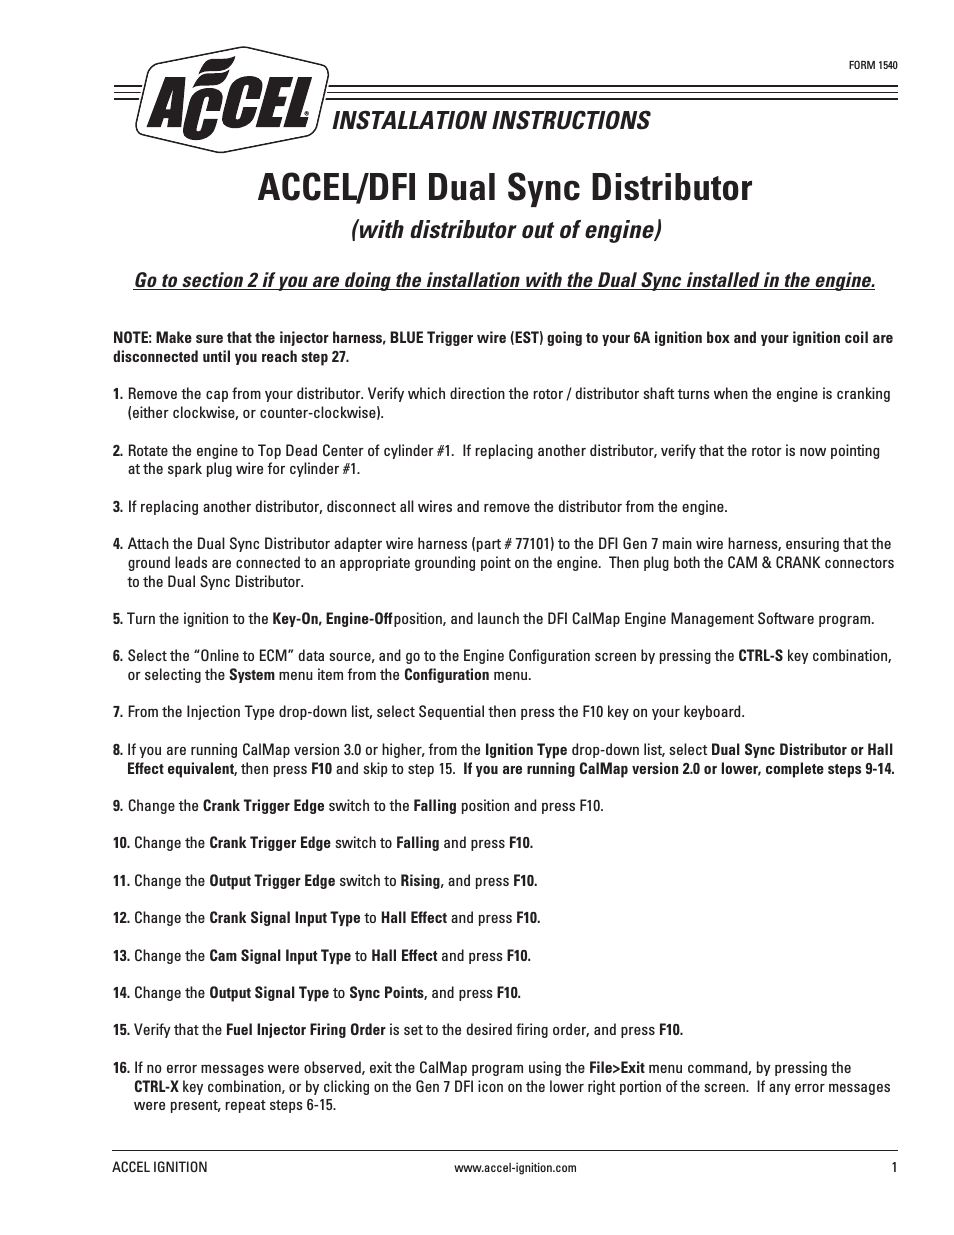 ACCEL DFI Dual Sync Distributor 77100